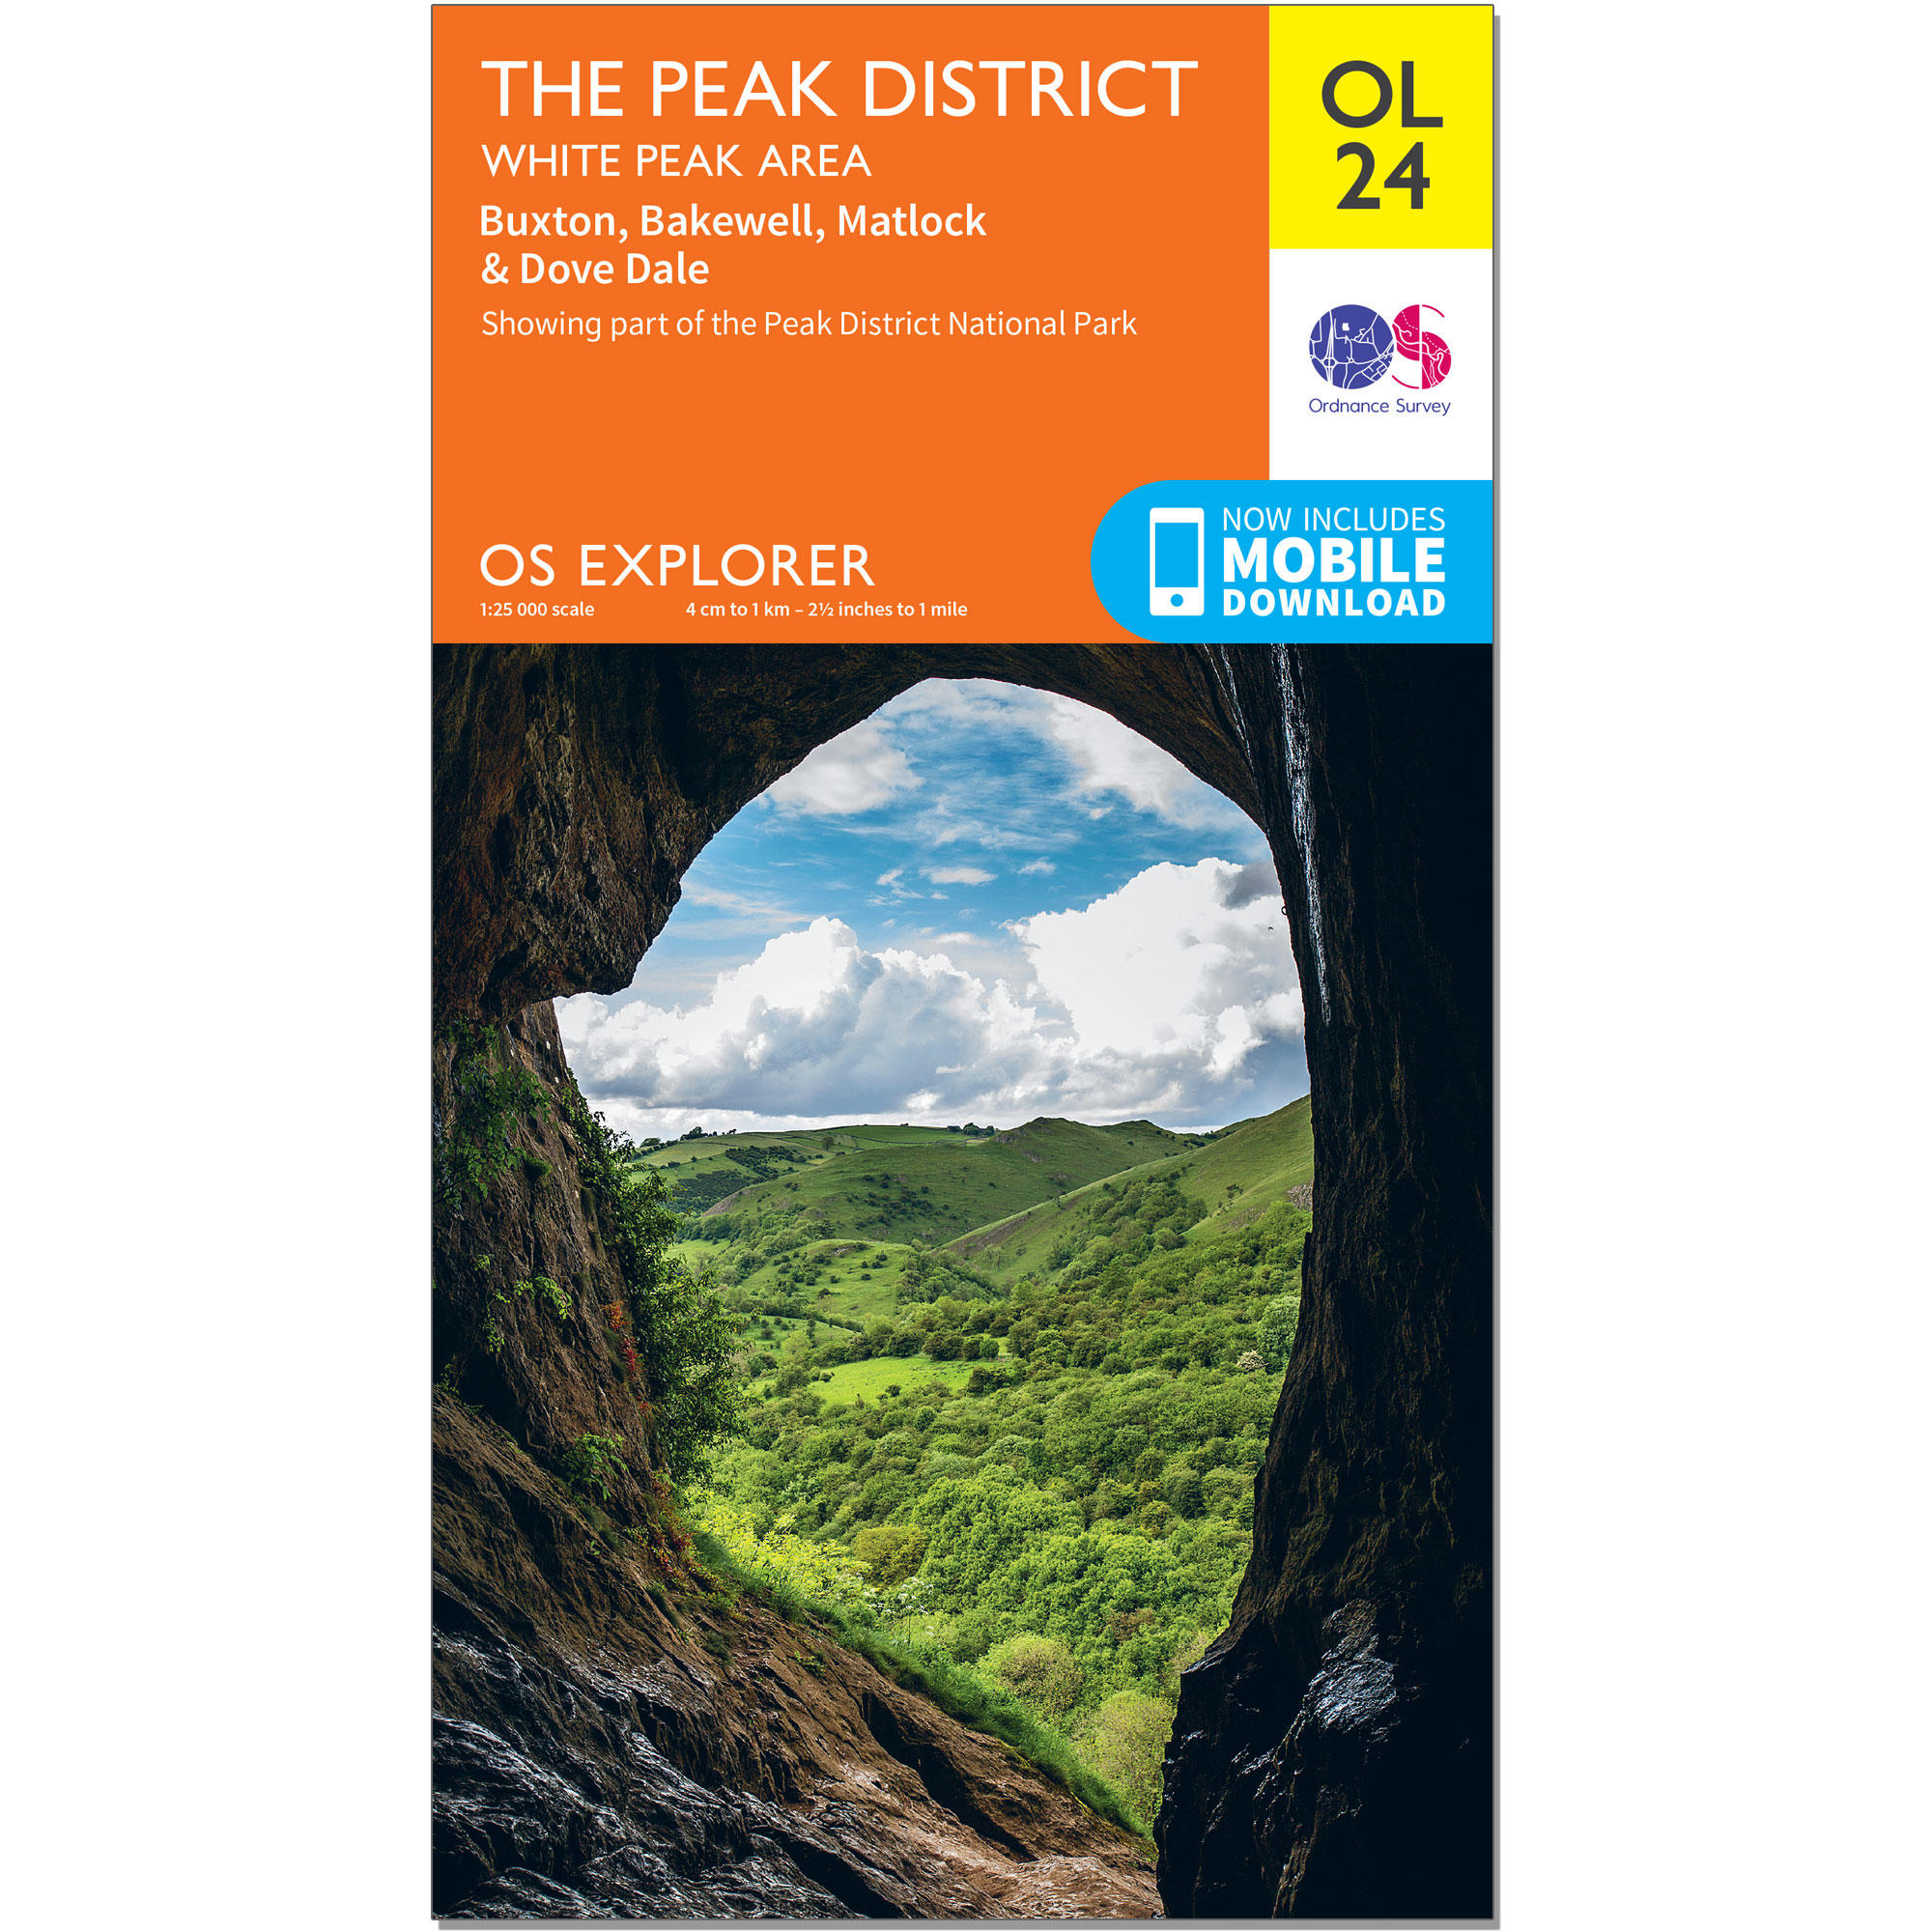 OS Explorer Leisure Map - The Peak District, White Peak 1/2